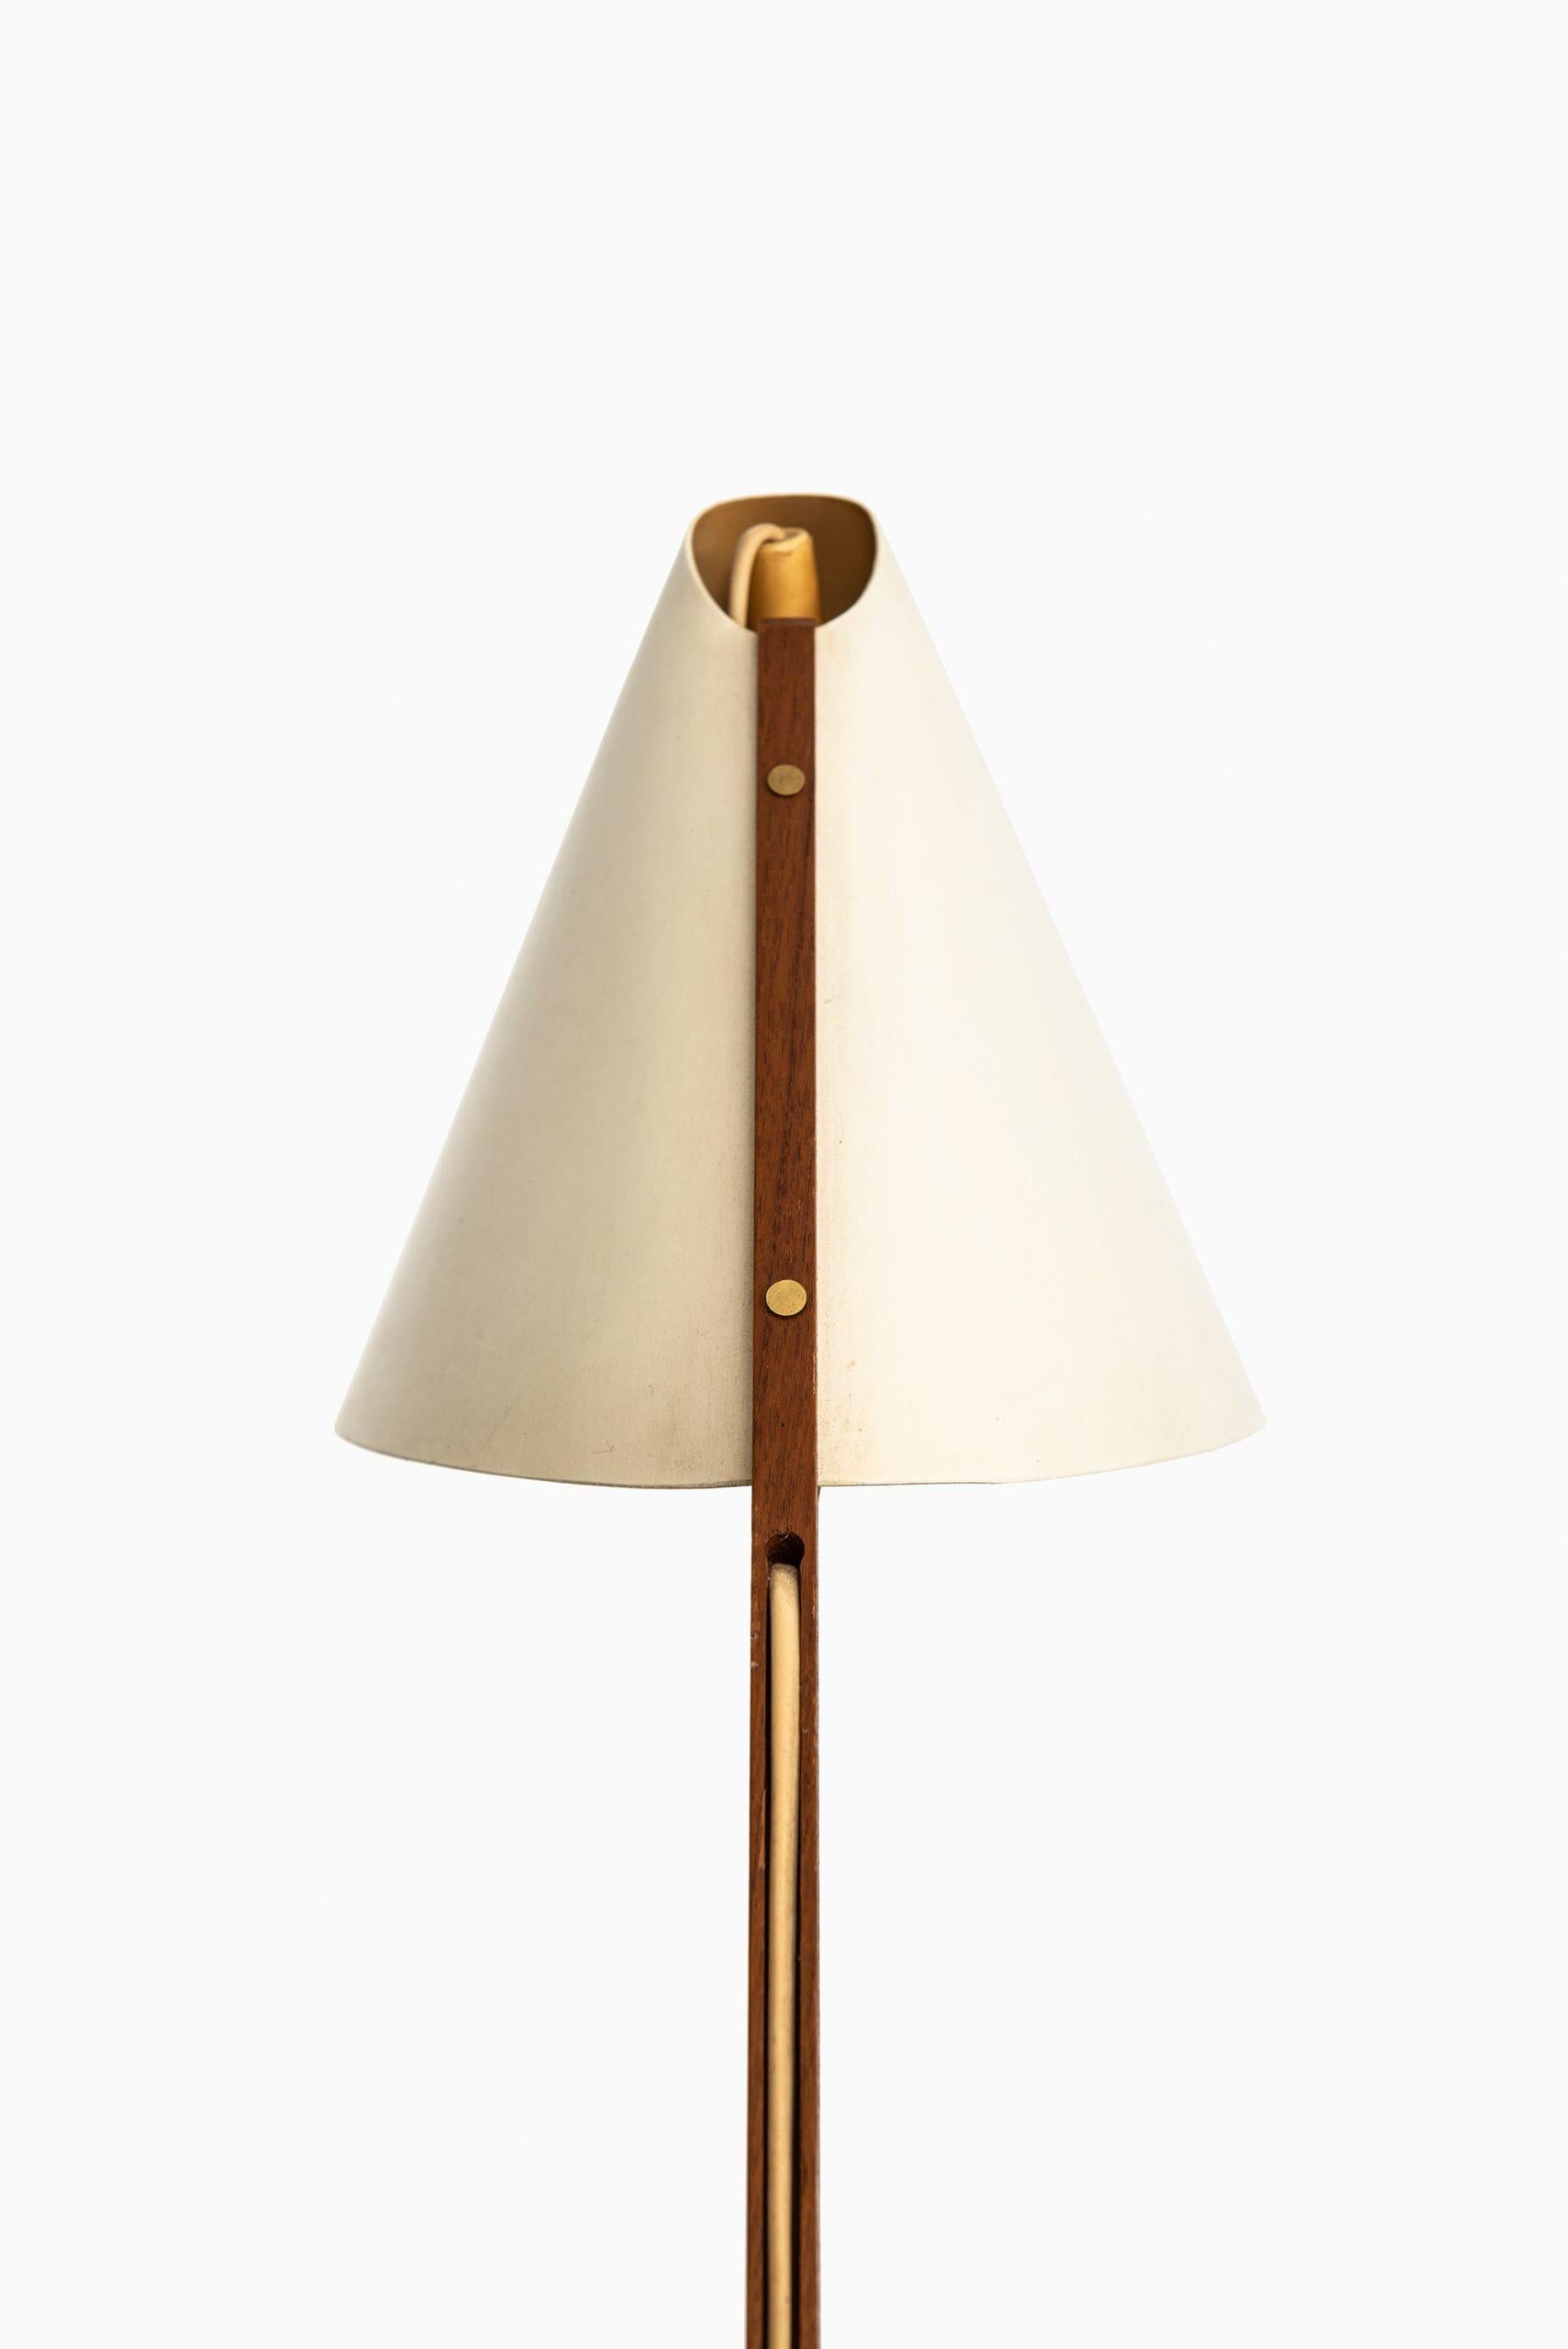 Scandinavian Modern Hans-Agne Jakobsson Table Lamp Model B-54 Produced by Hans-Agne Jakobsson AB For Sale